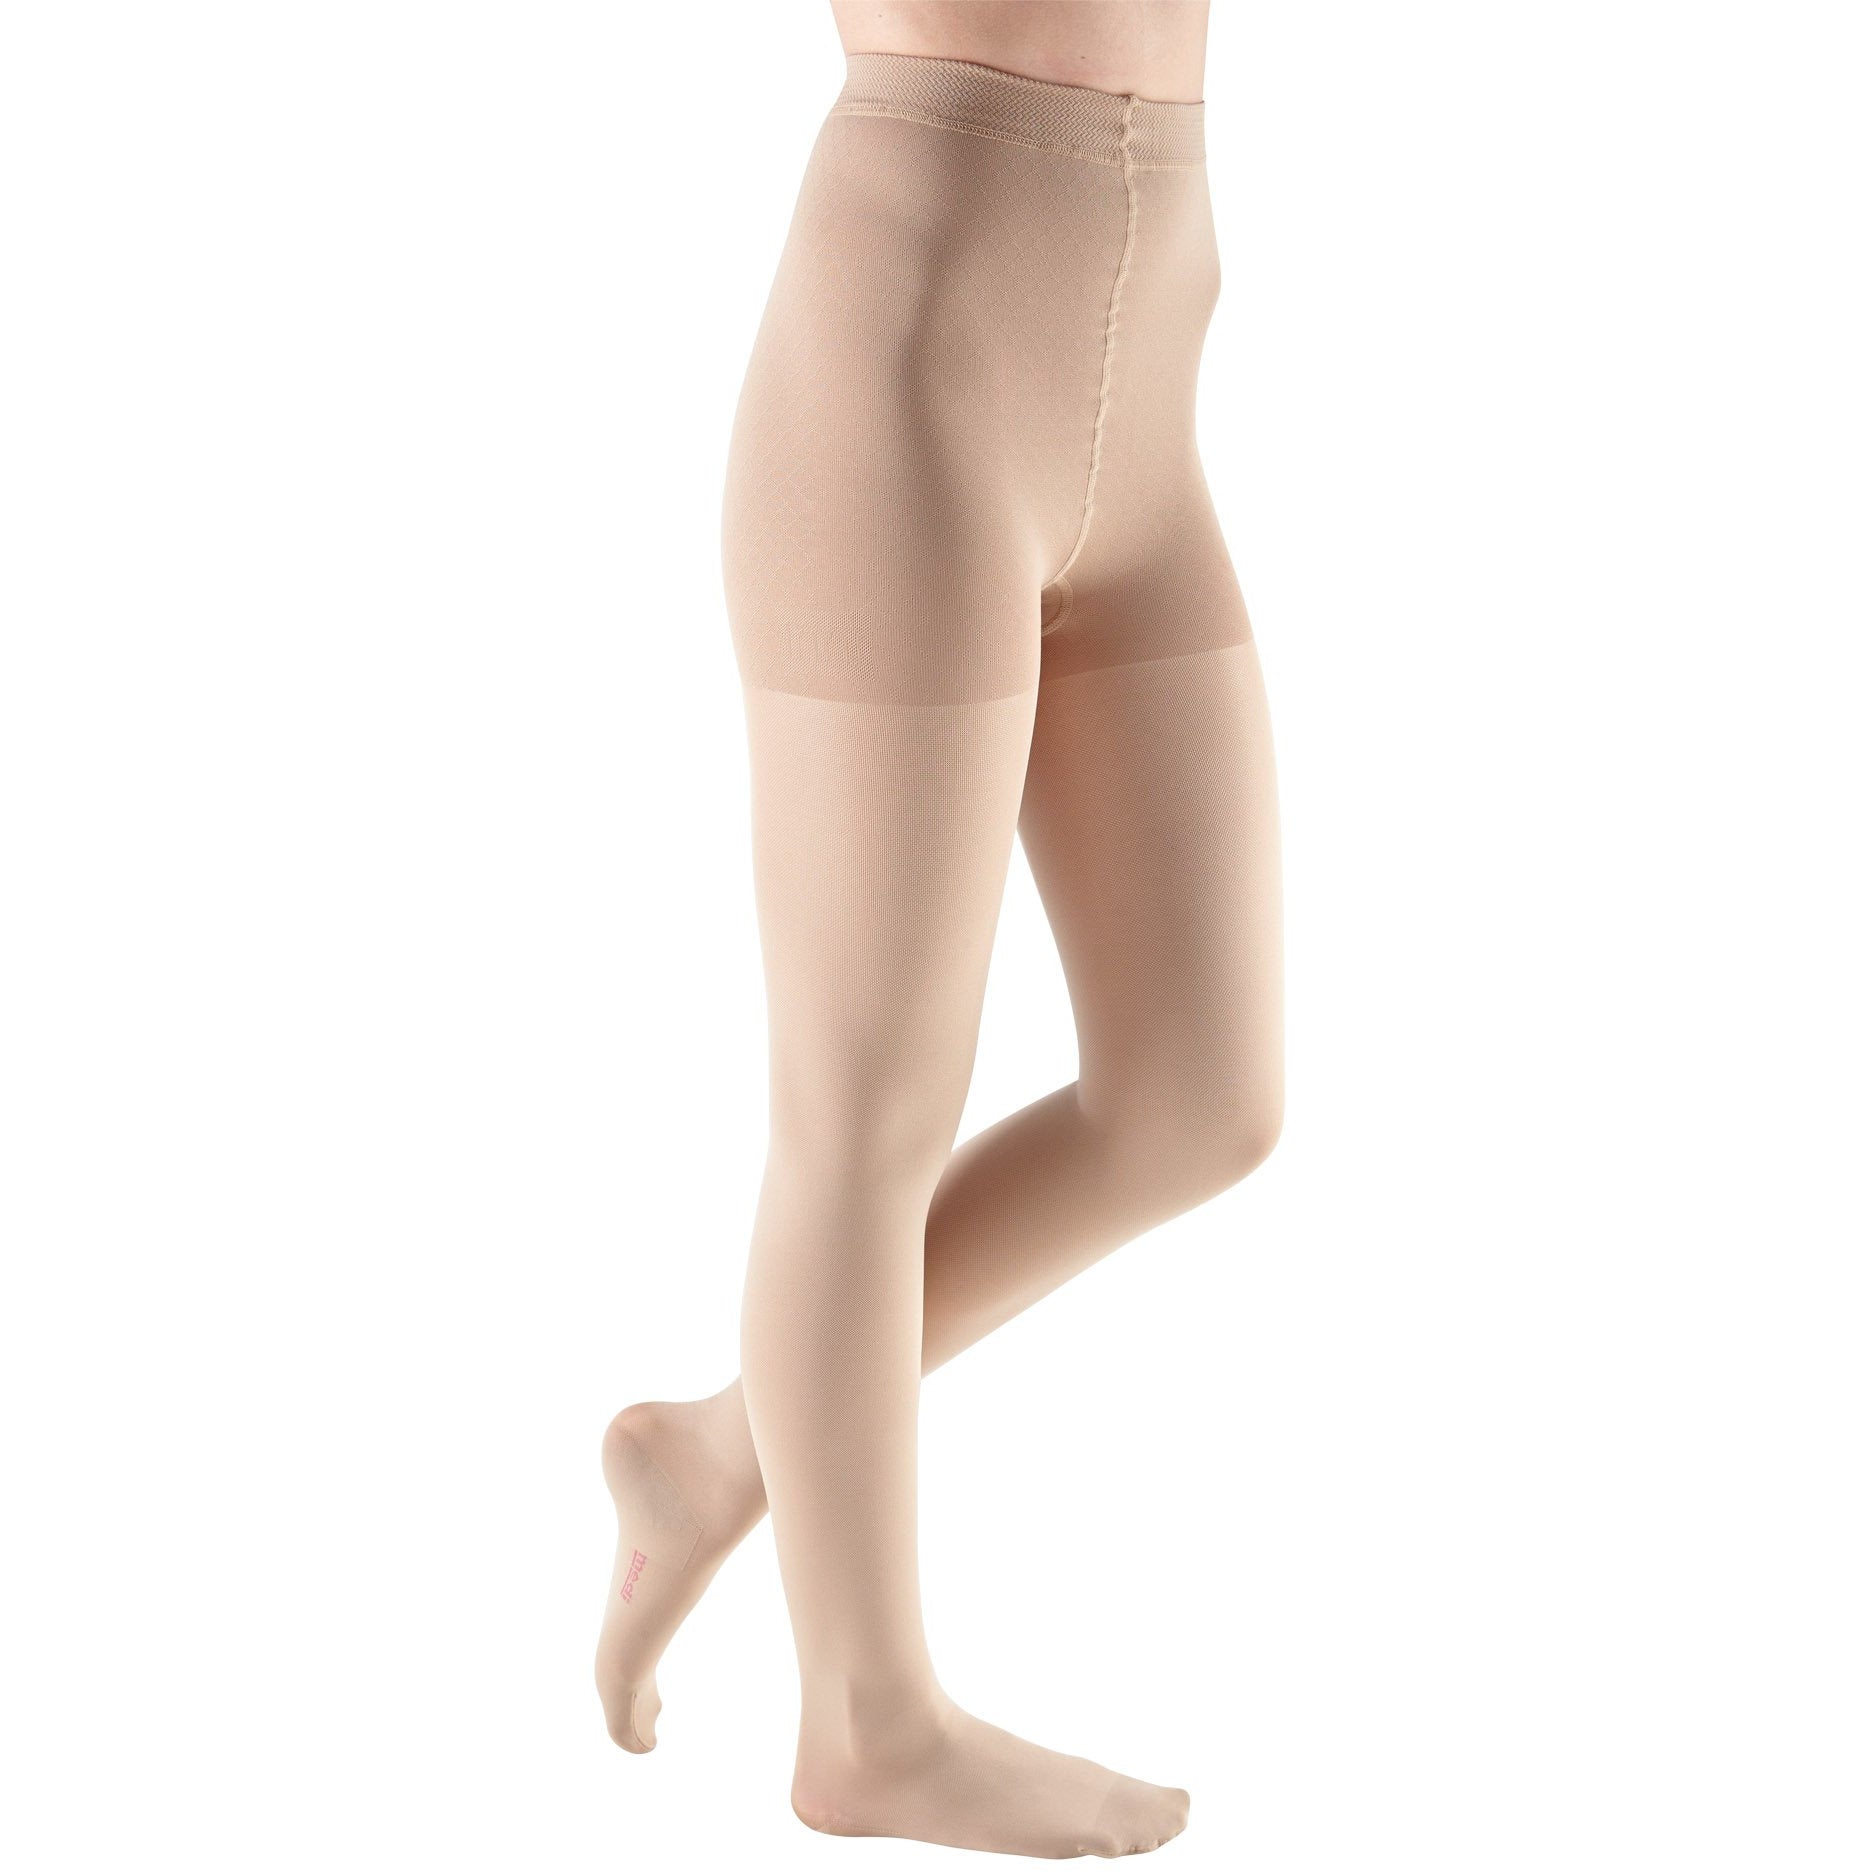 Mediven Comfort 20-30 mmHg Pantyhose, Sandstone